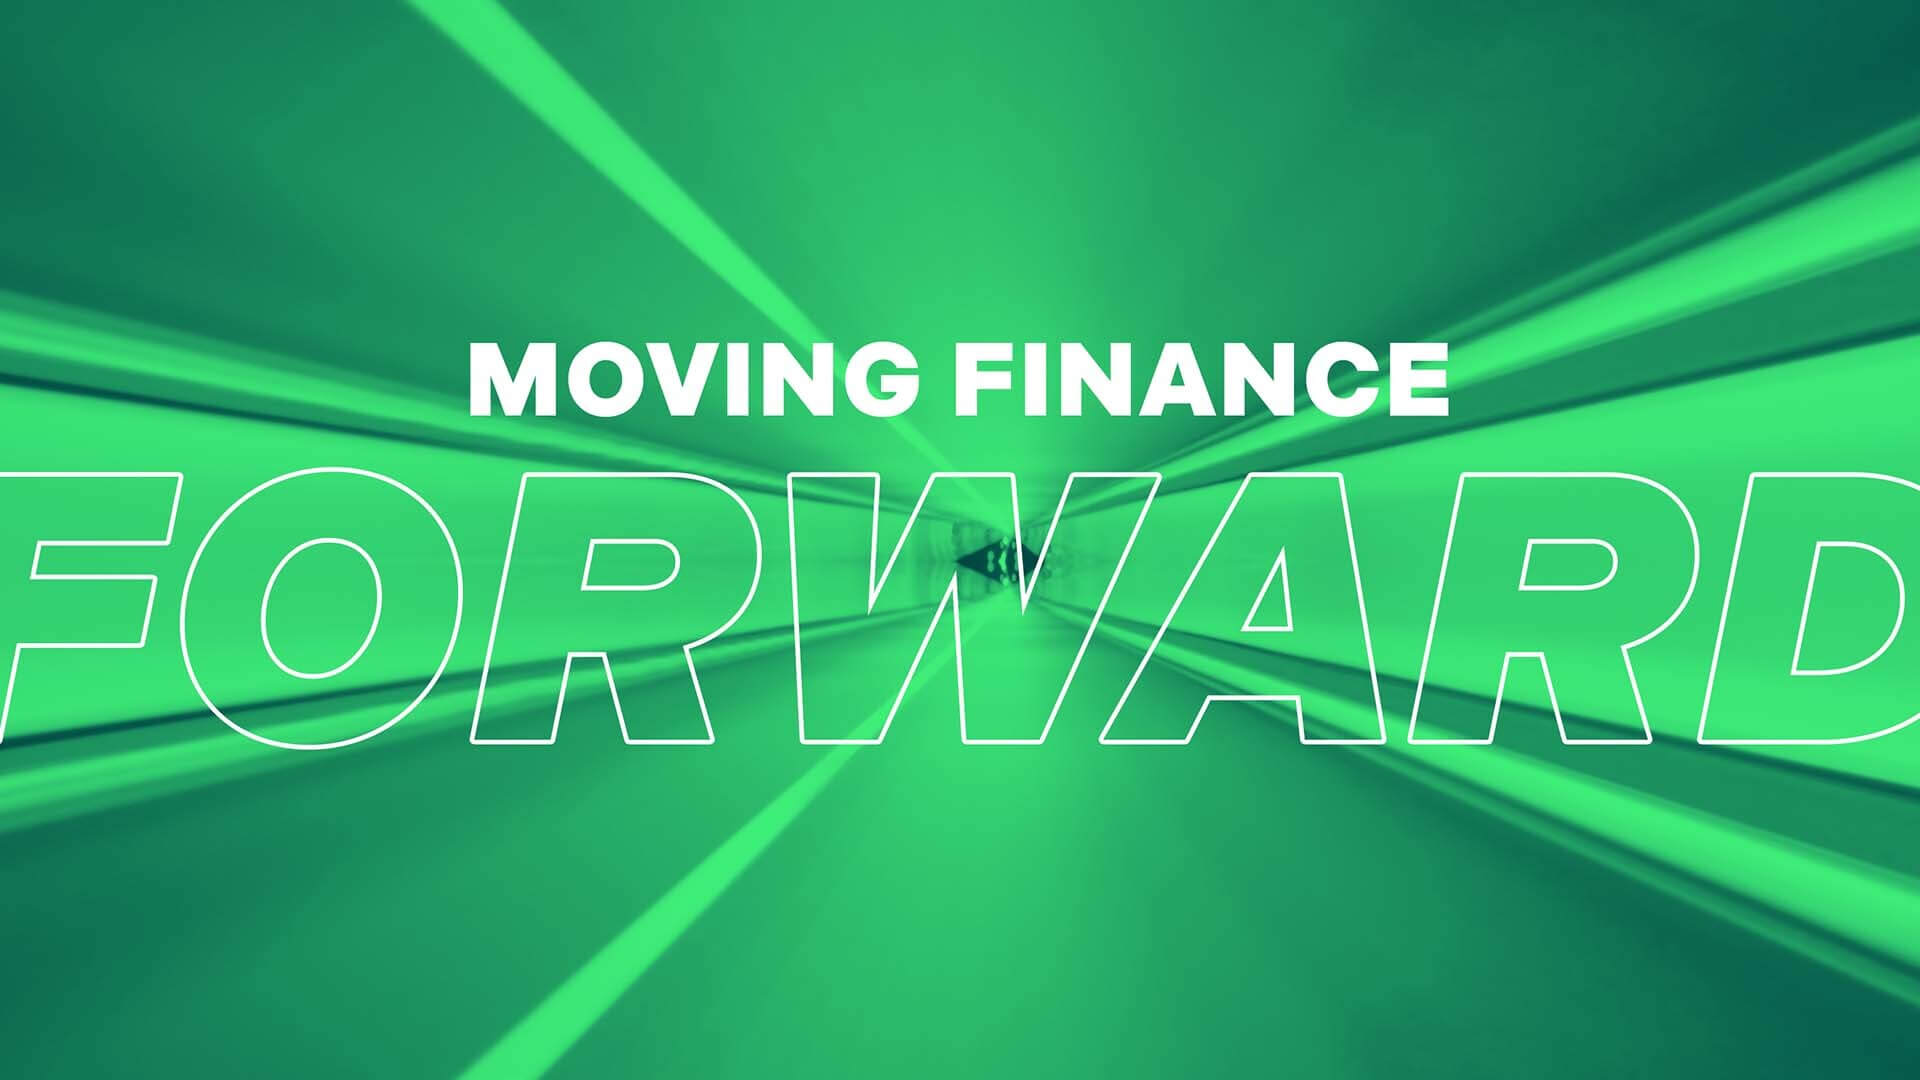 Billtrust Video Thumbnail with Moving Finance Forward text